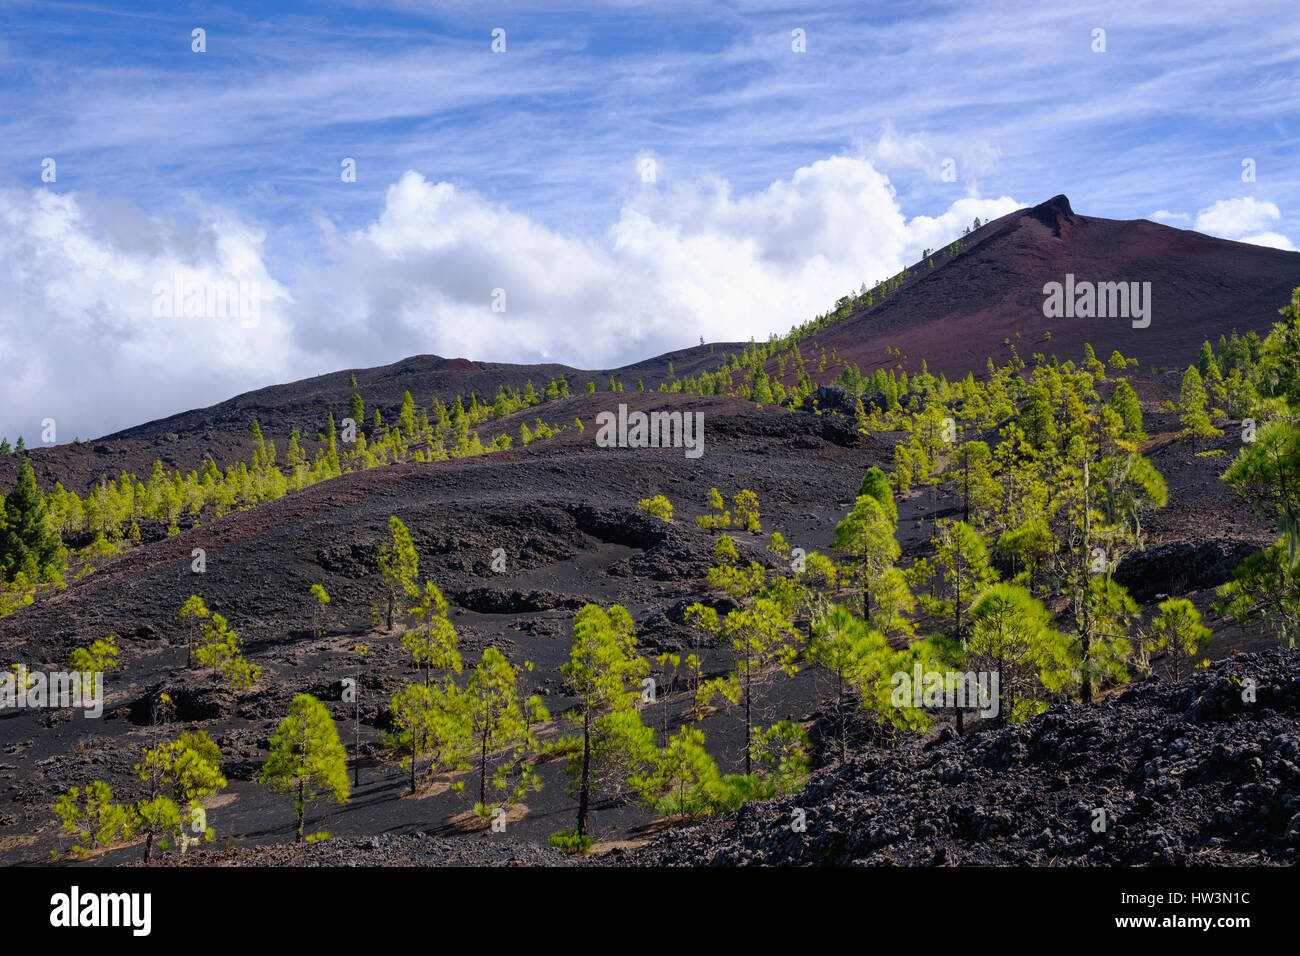 Montaña Negra or Volcán Garachico, lava landscape, at El Tanque, Tenerife, Canary Islands, Spain Stock Photo